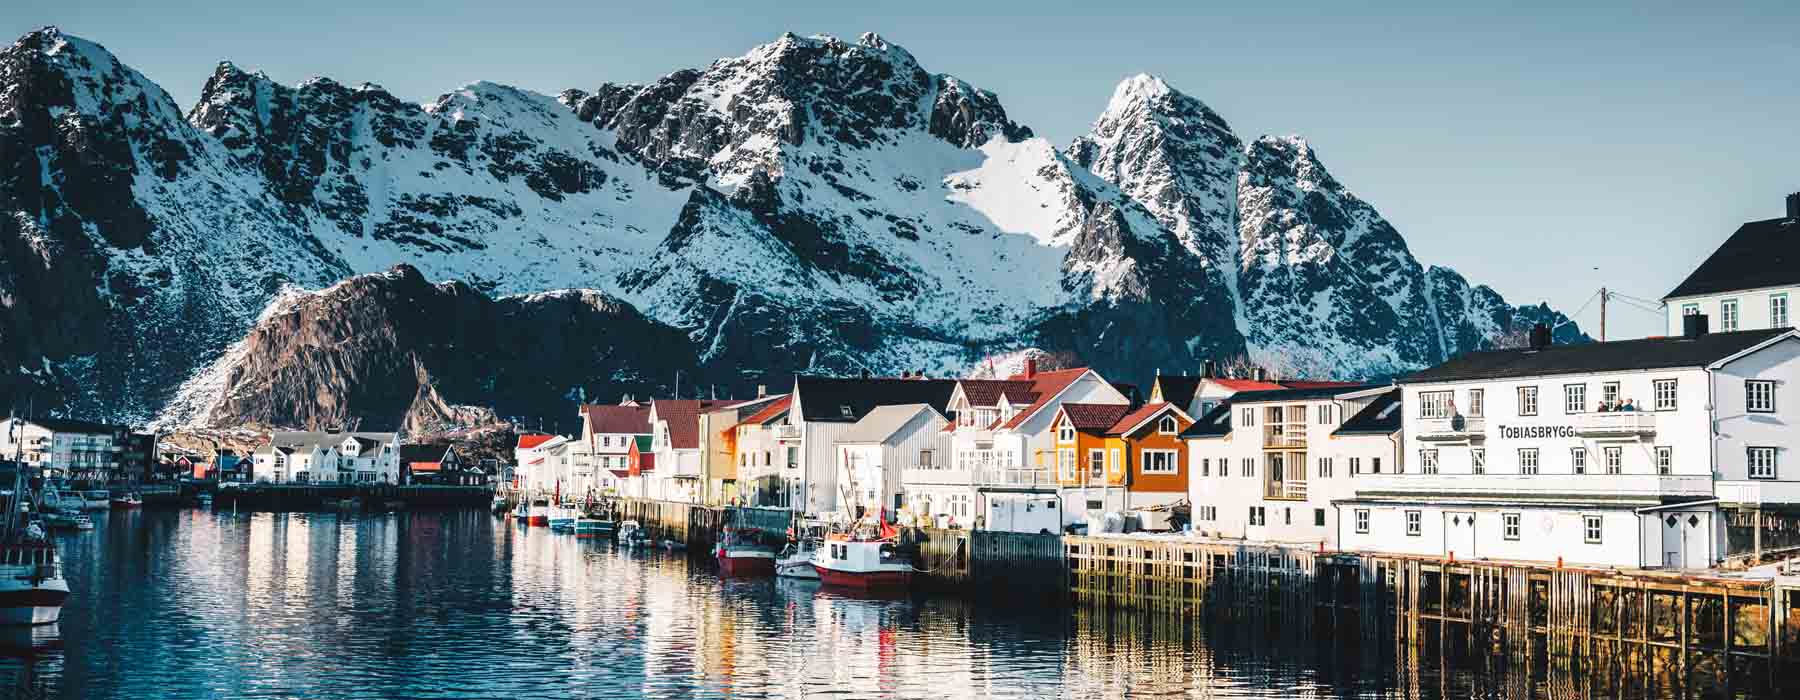 All our Norway<br class="hidden-md hidden-lg" /> Snow Holidays